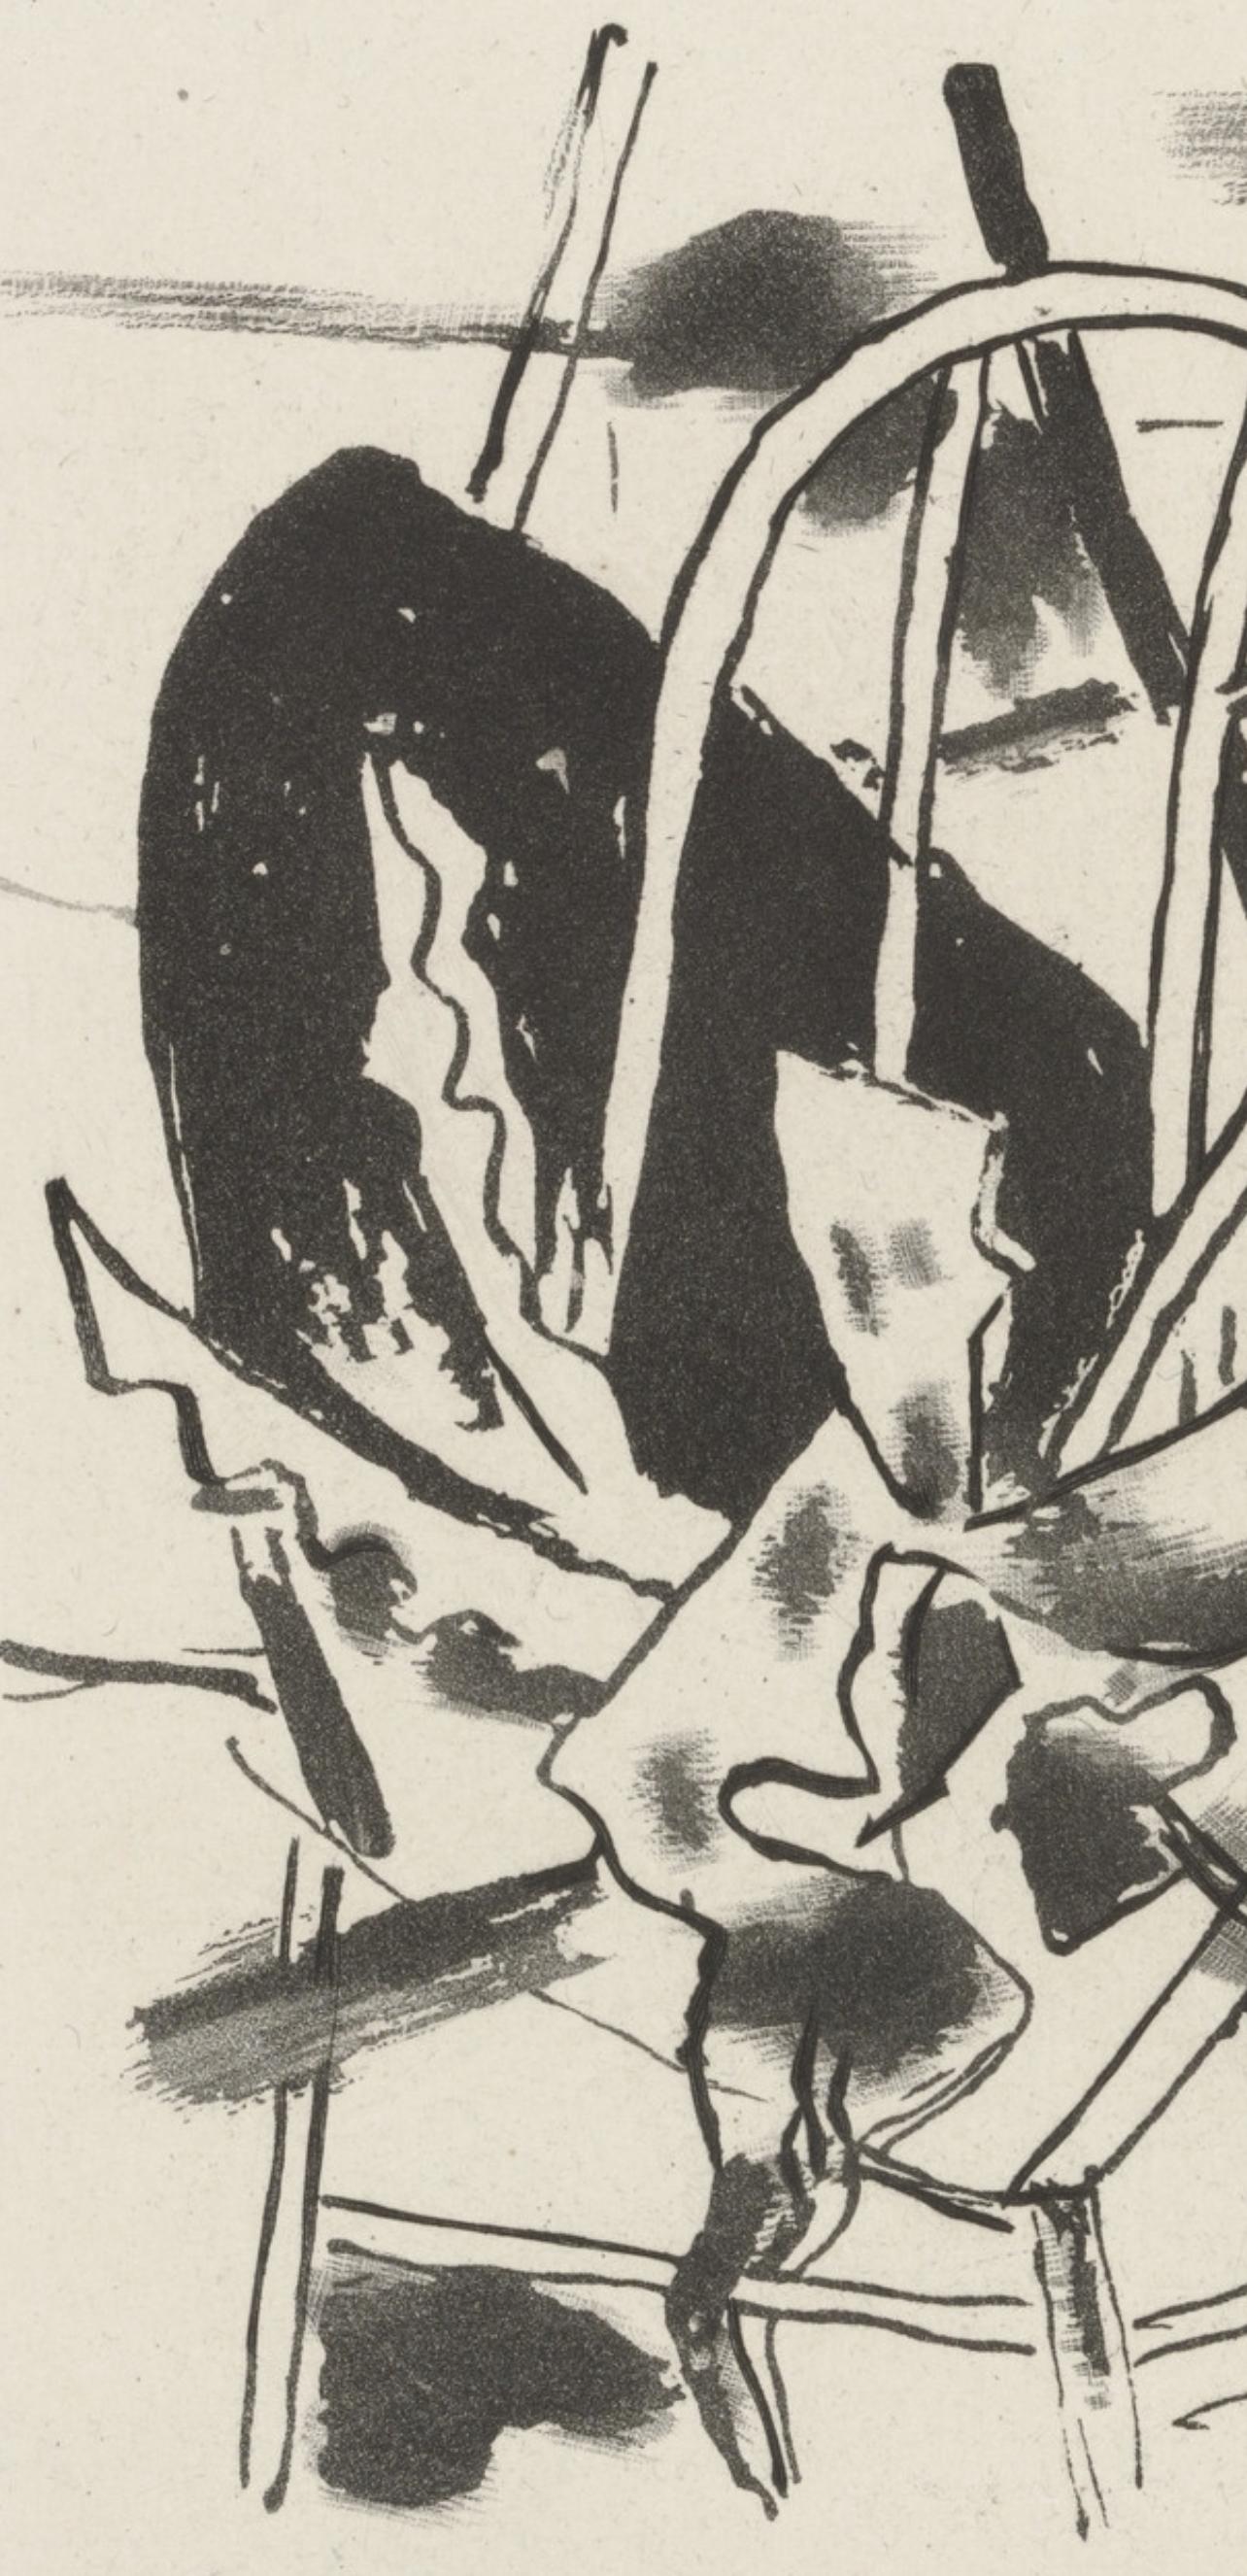 Léger, Composition, Du cubisme (after) - Modern Print by Fernand Léger